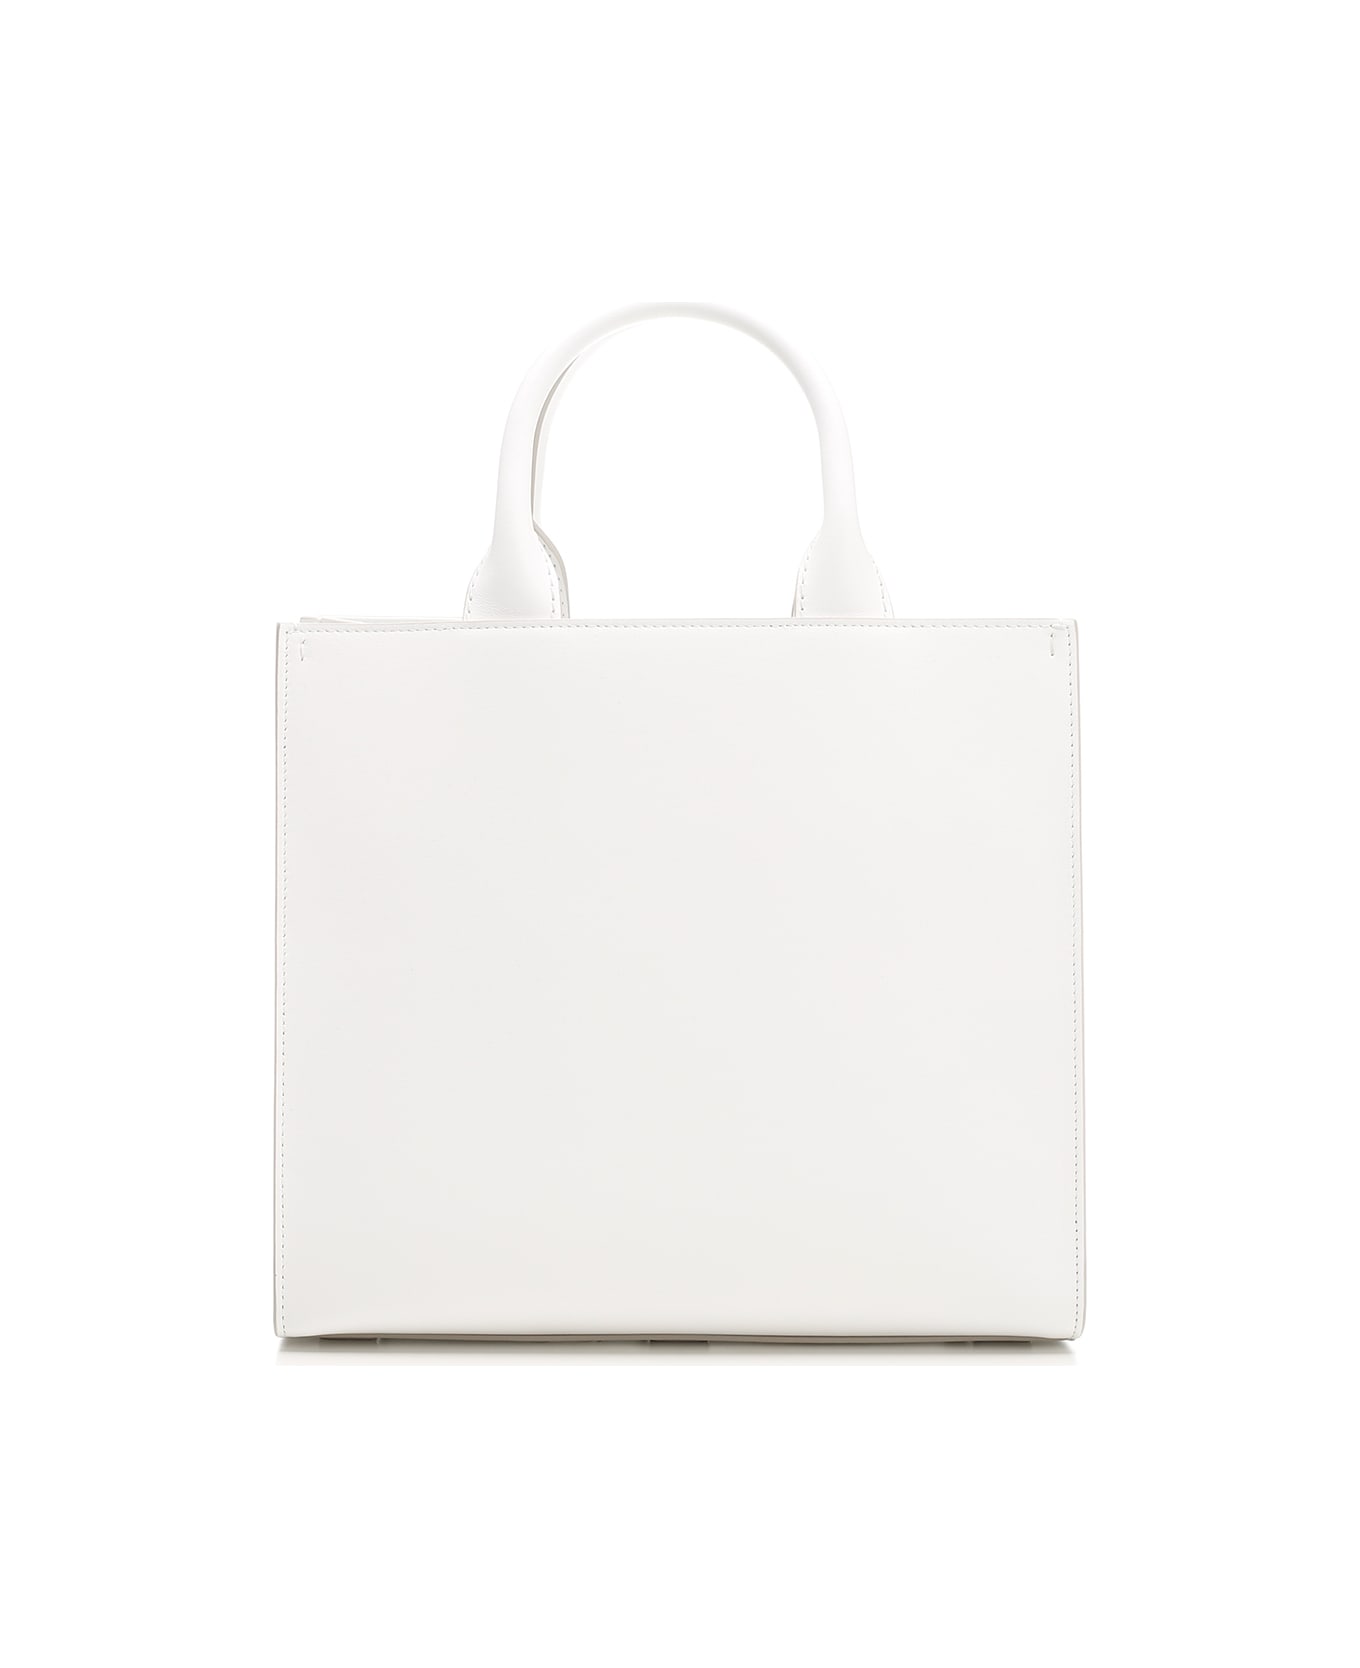 Dolce & Gabbana Handbag In Leather - White トートバッグ